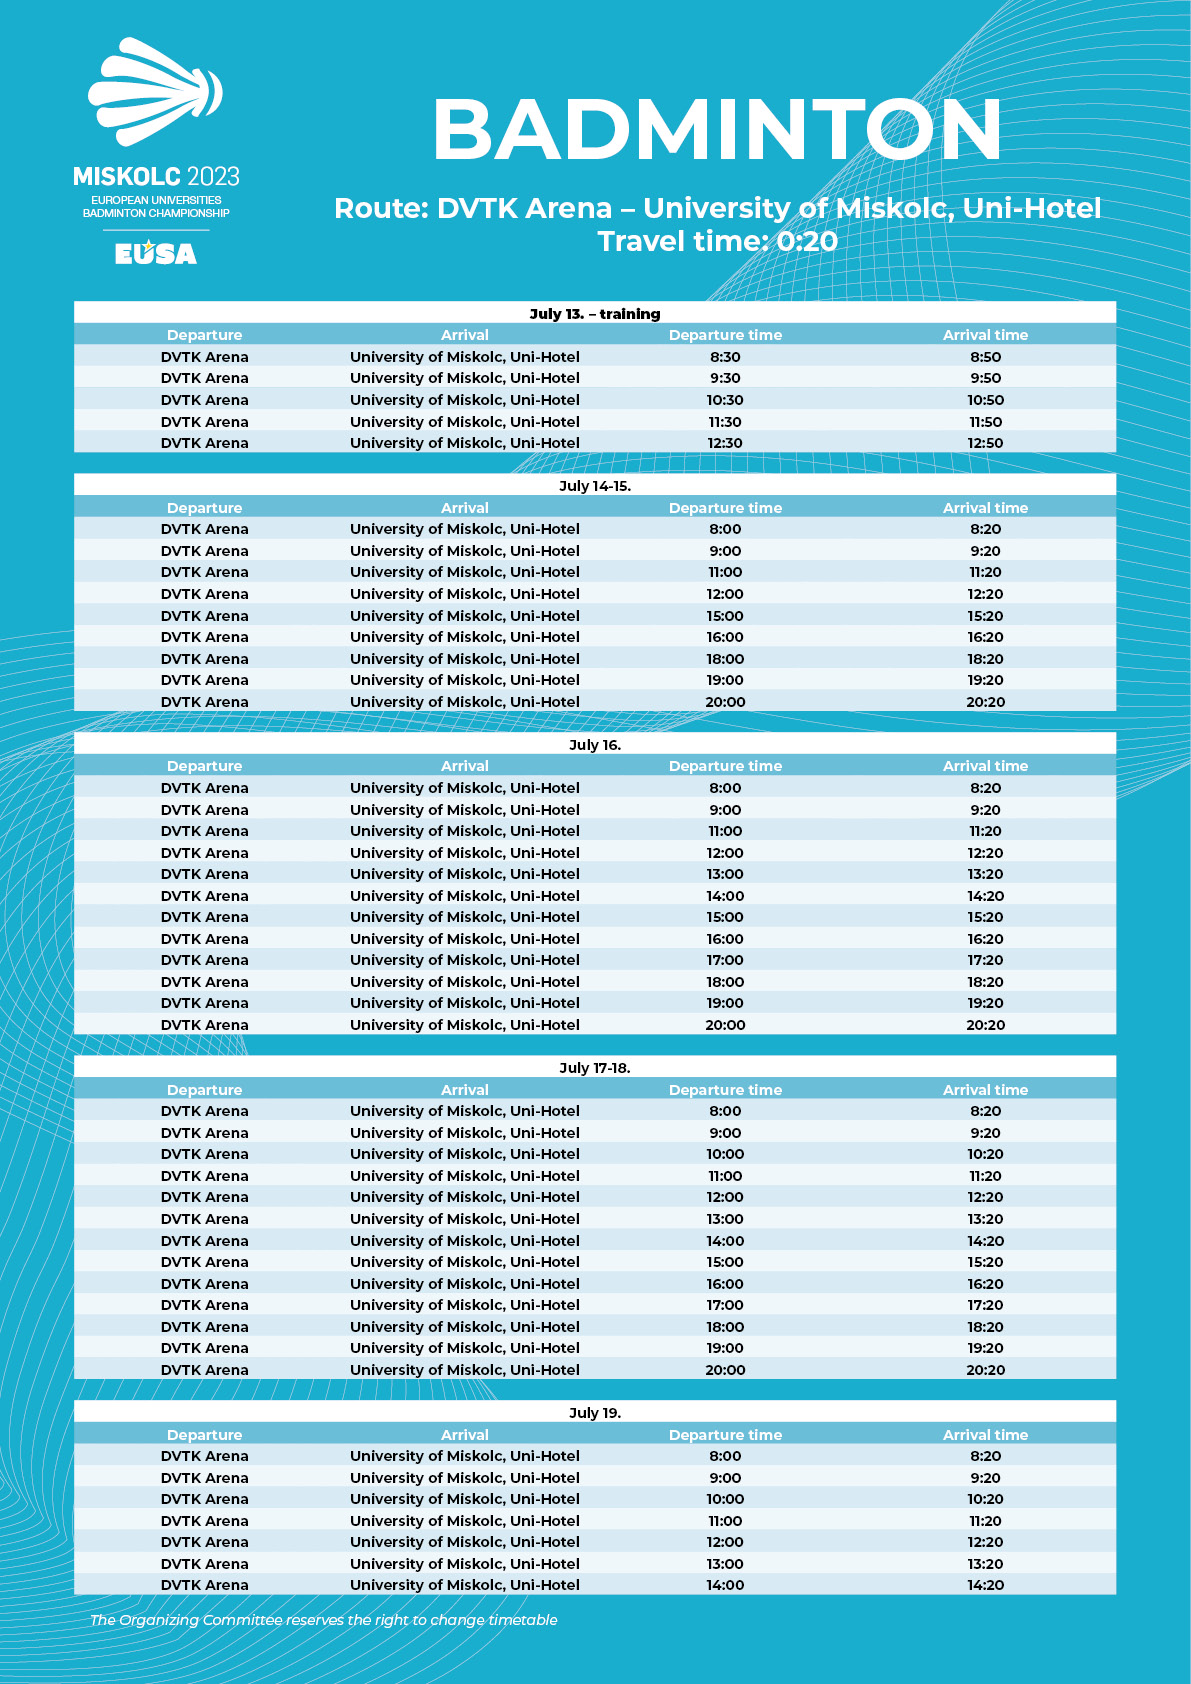 bus schedule